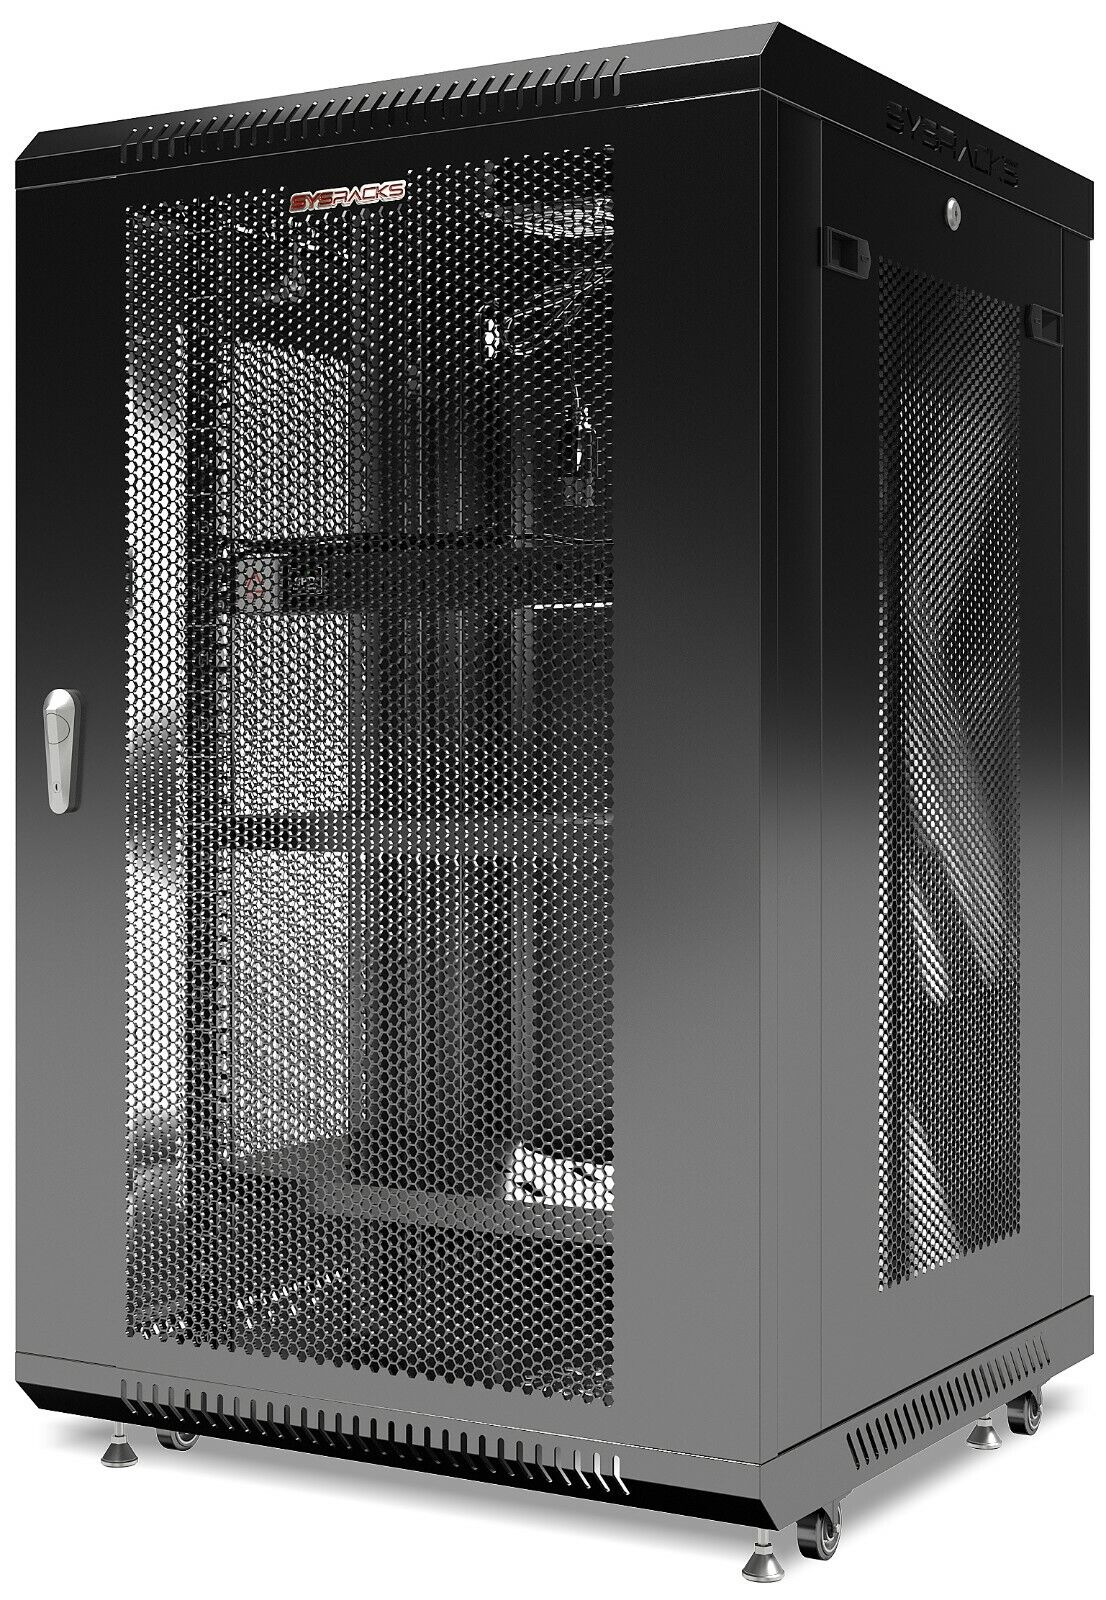 Server Rack 18U Wall Mount Cabinet Locking Networking Data Enclosure VENTED Door